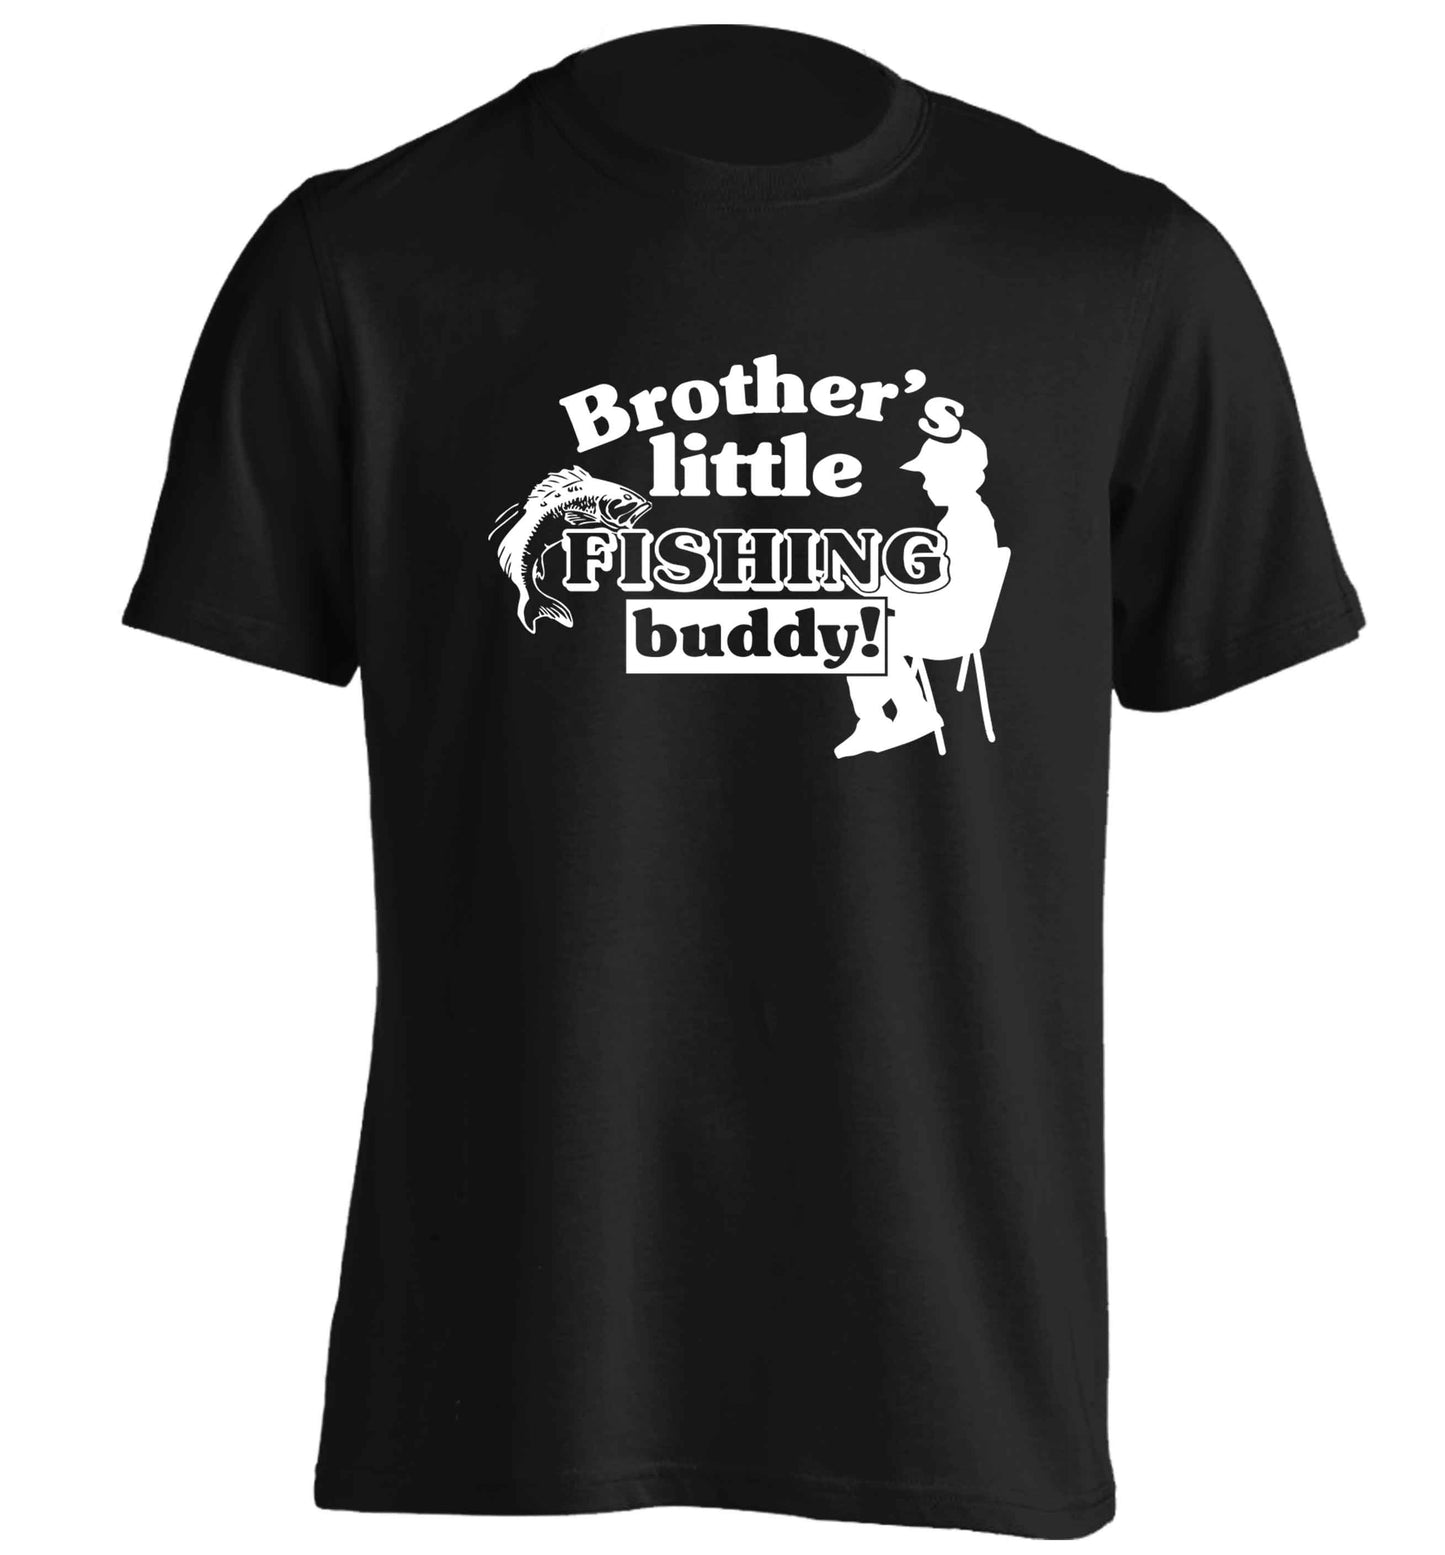 Brother's little fishing buddy adults unisex black Tshirt 2XL